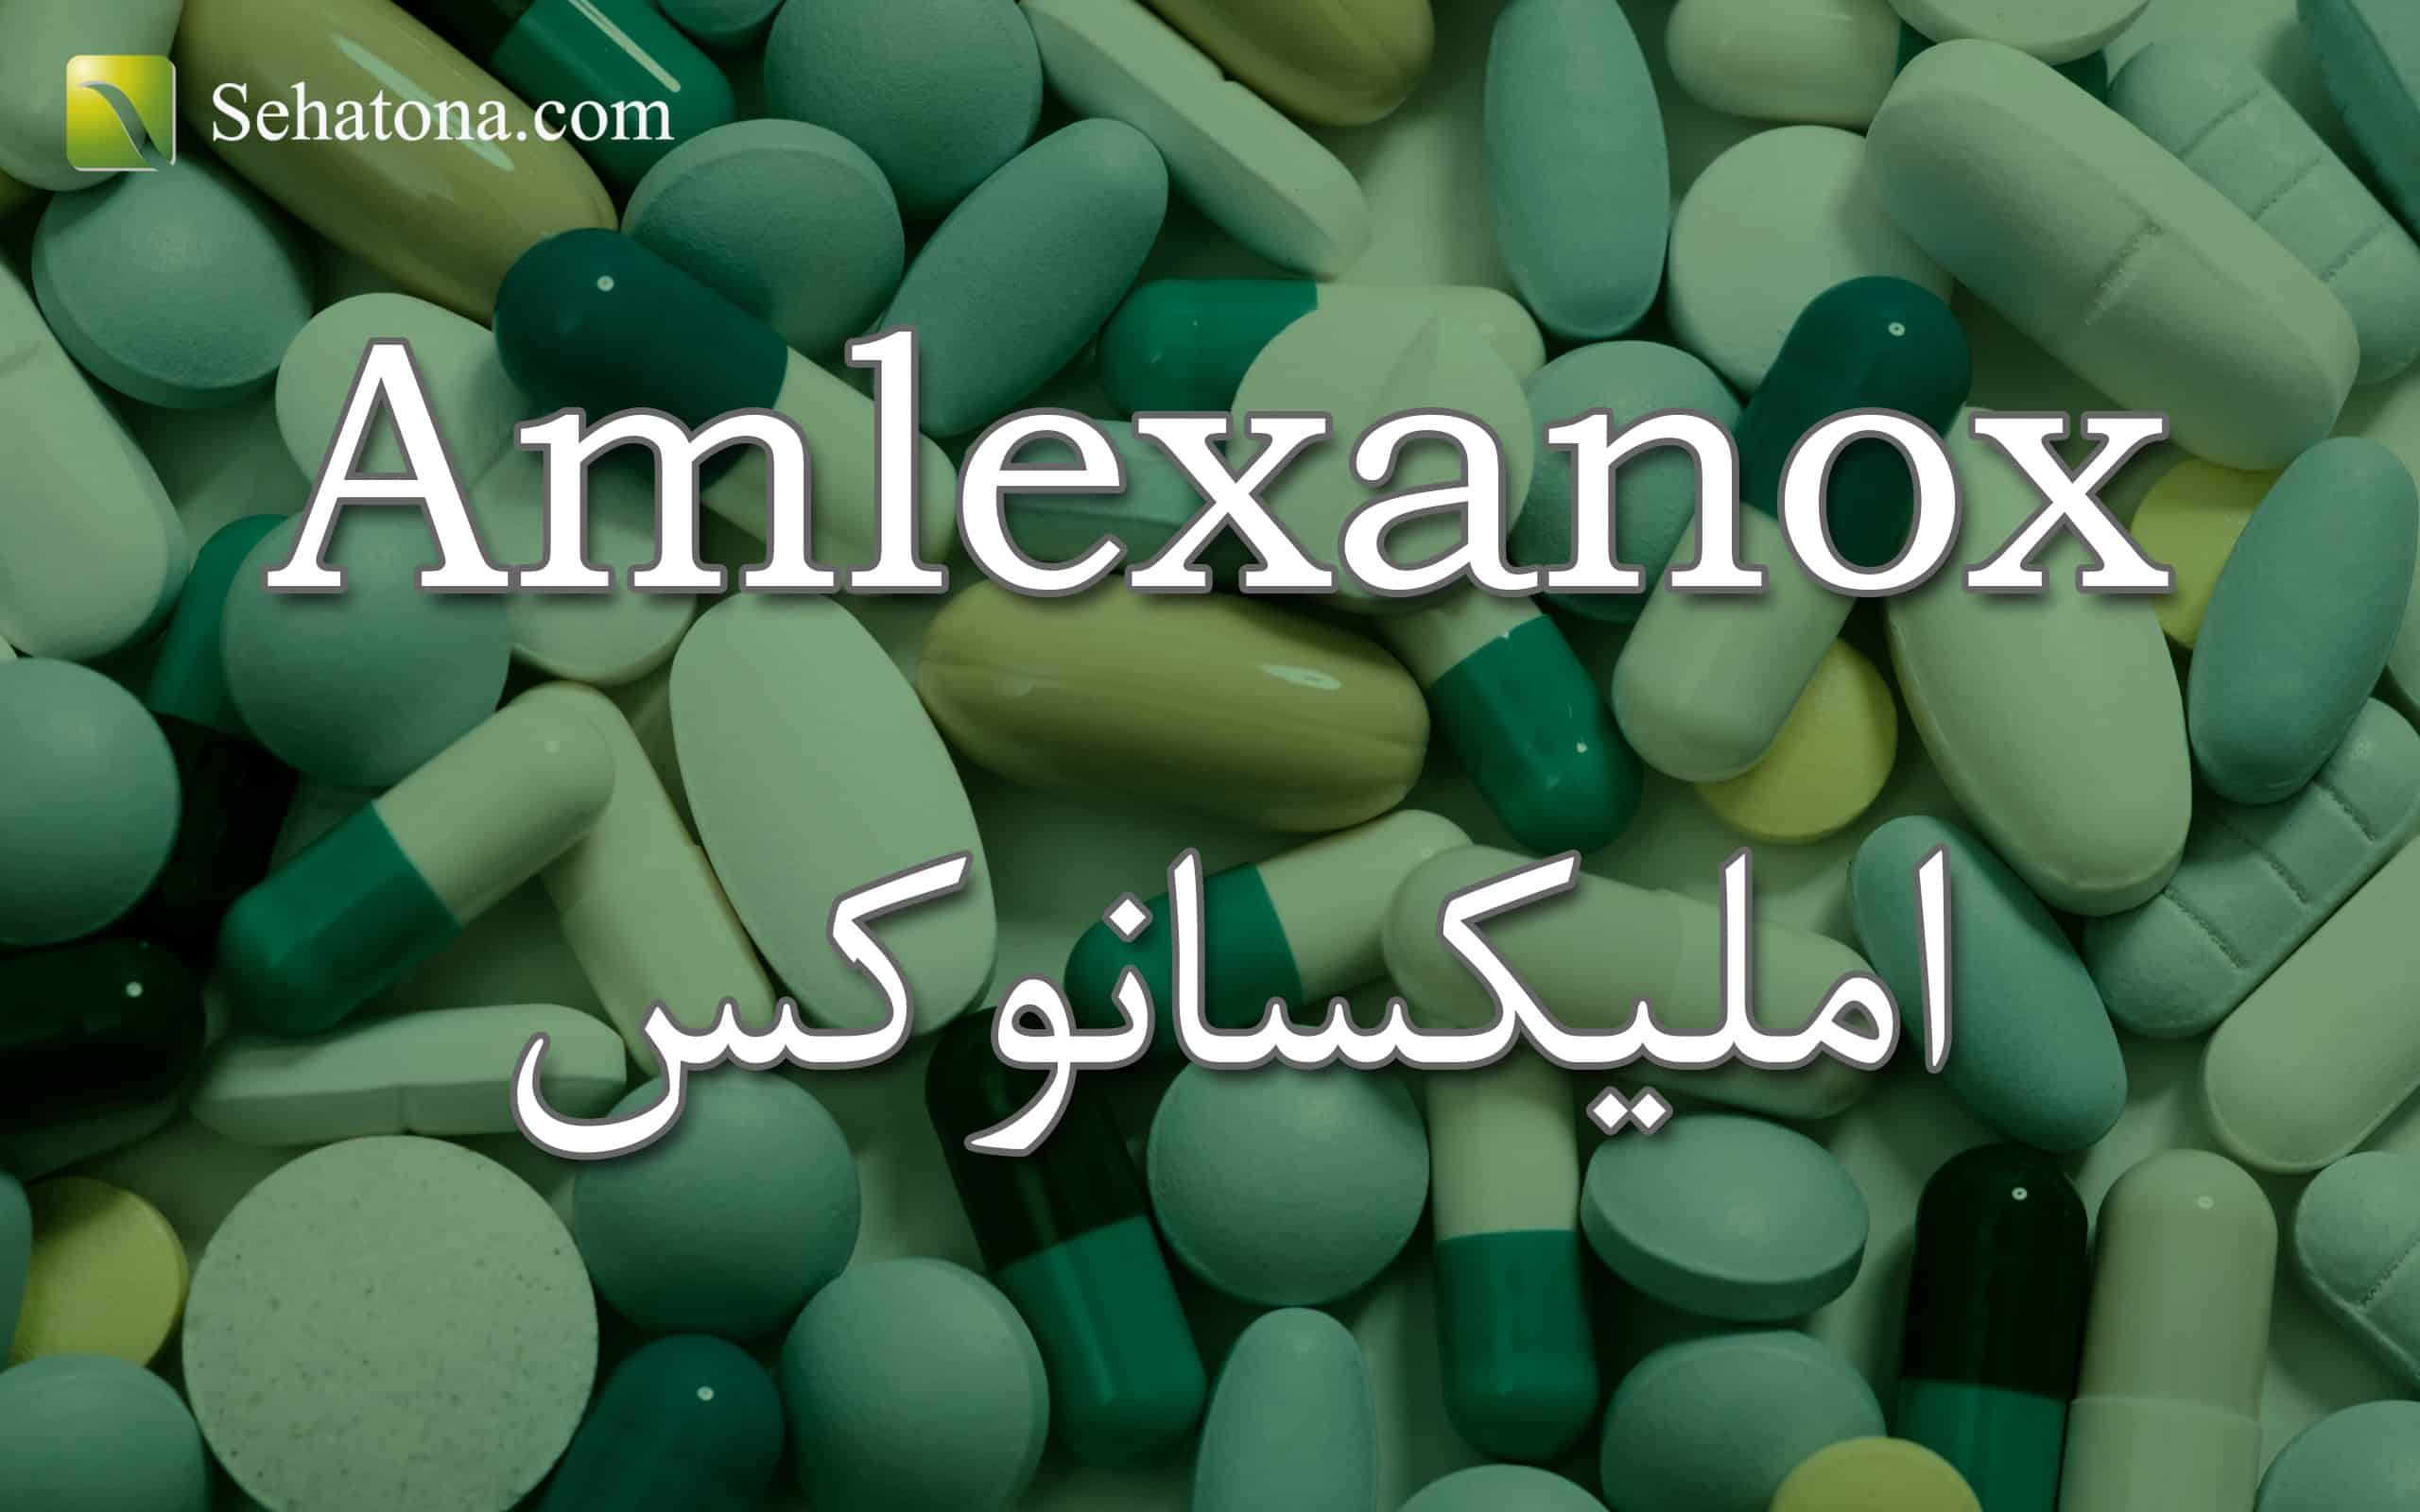 Amlexanox